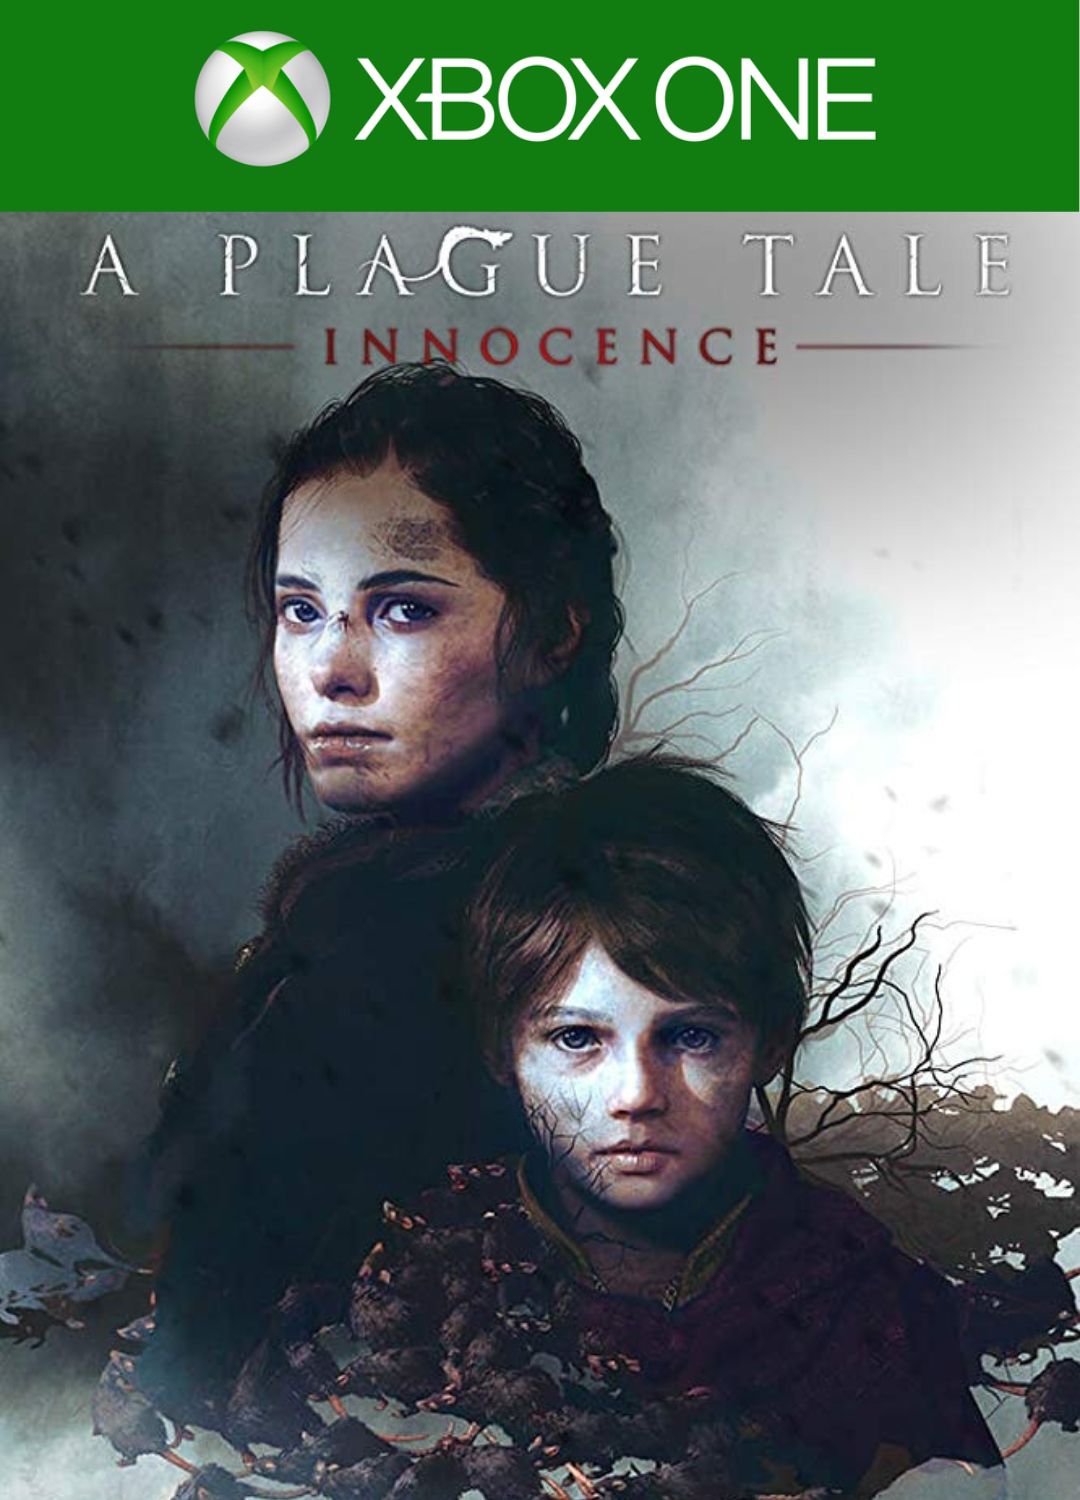 Xbox Game Pass do PC receberá A Plague Tale: Innocence, Children